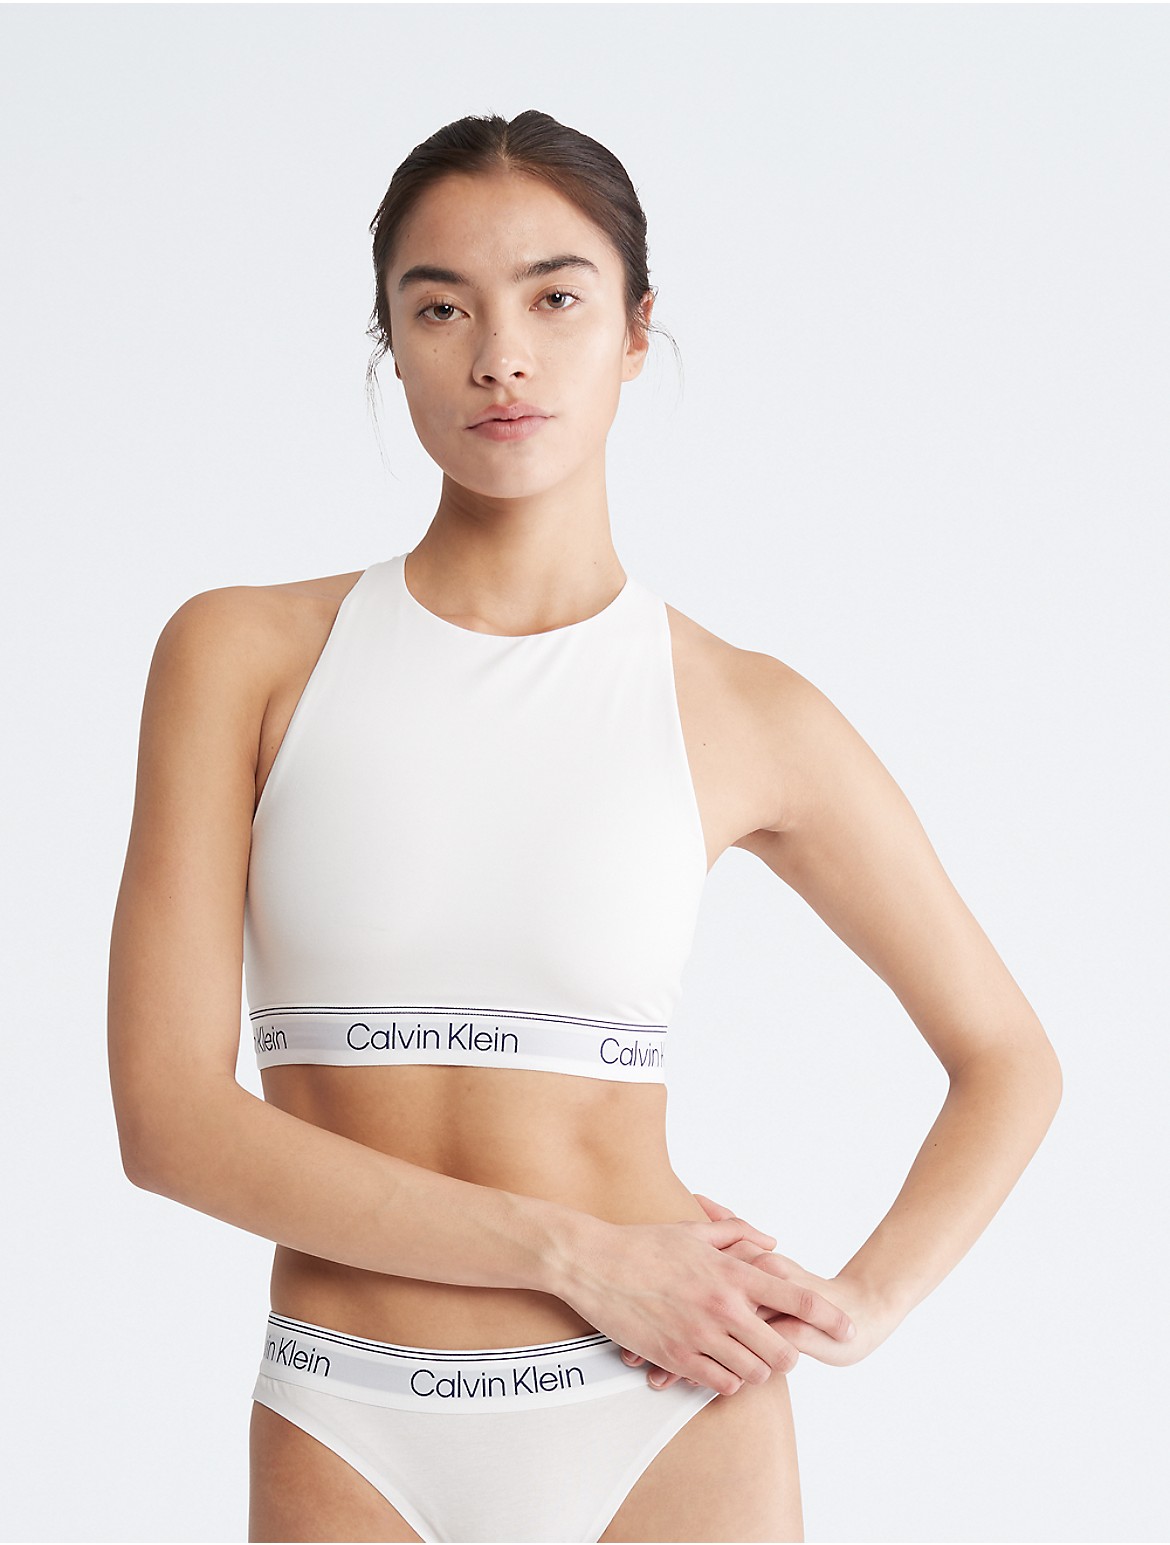 Calvin Klein Women's Calvin Klein Athletic Unlined Bralette - White - S